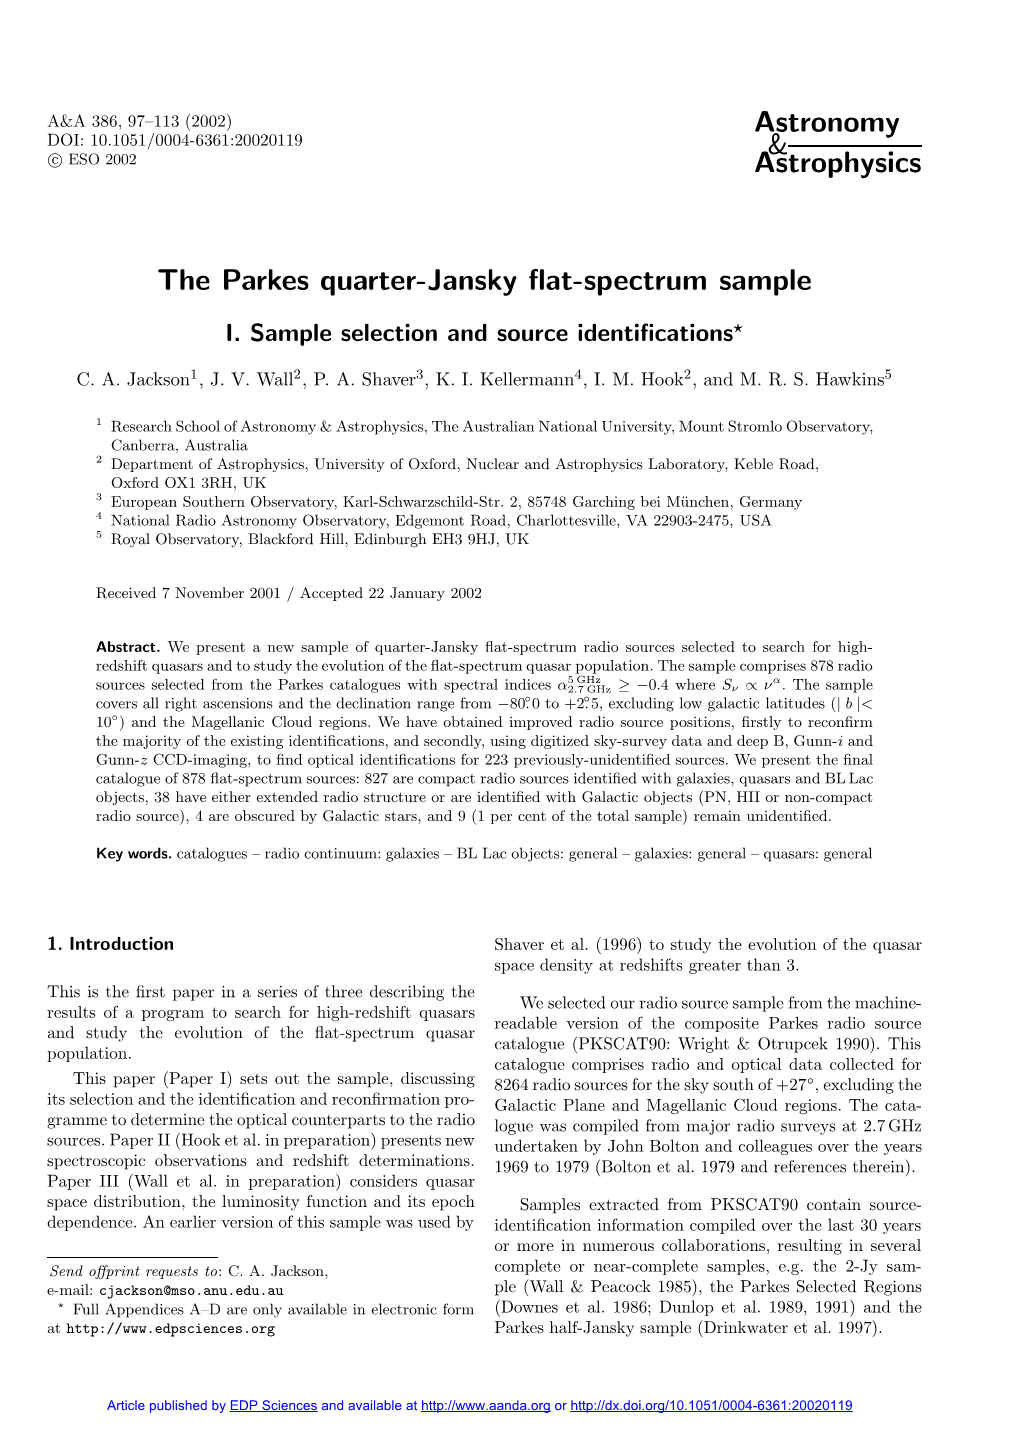 The Parkes Quarter-Jansky Flat-Spectrum Sample